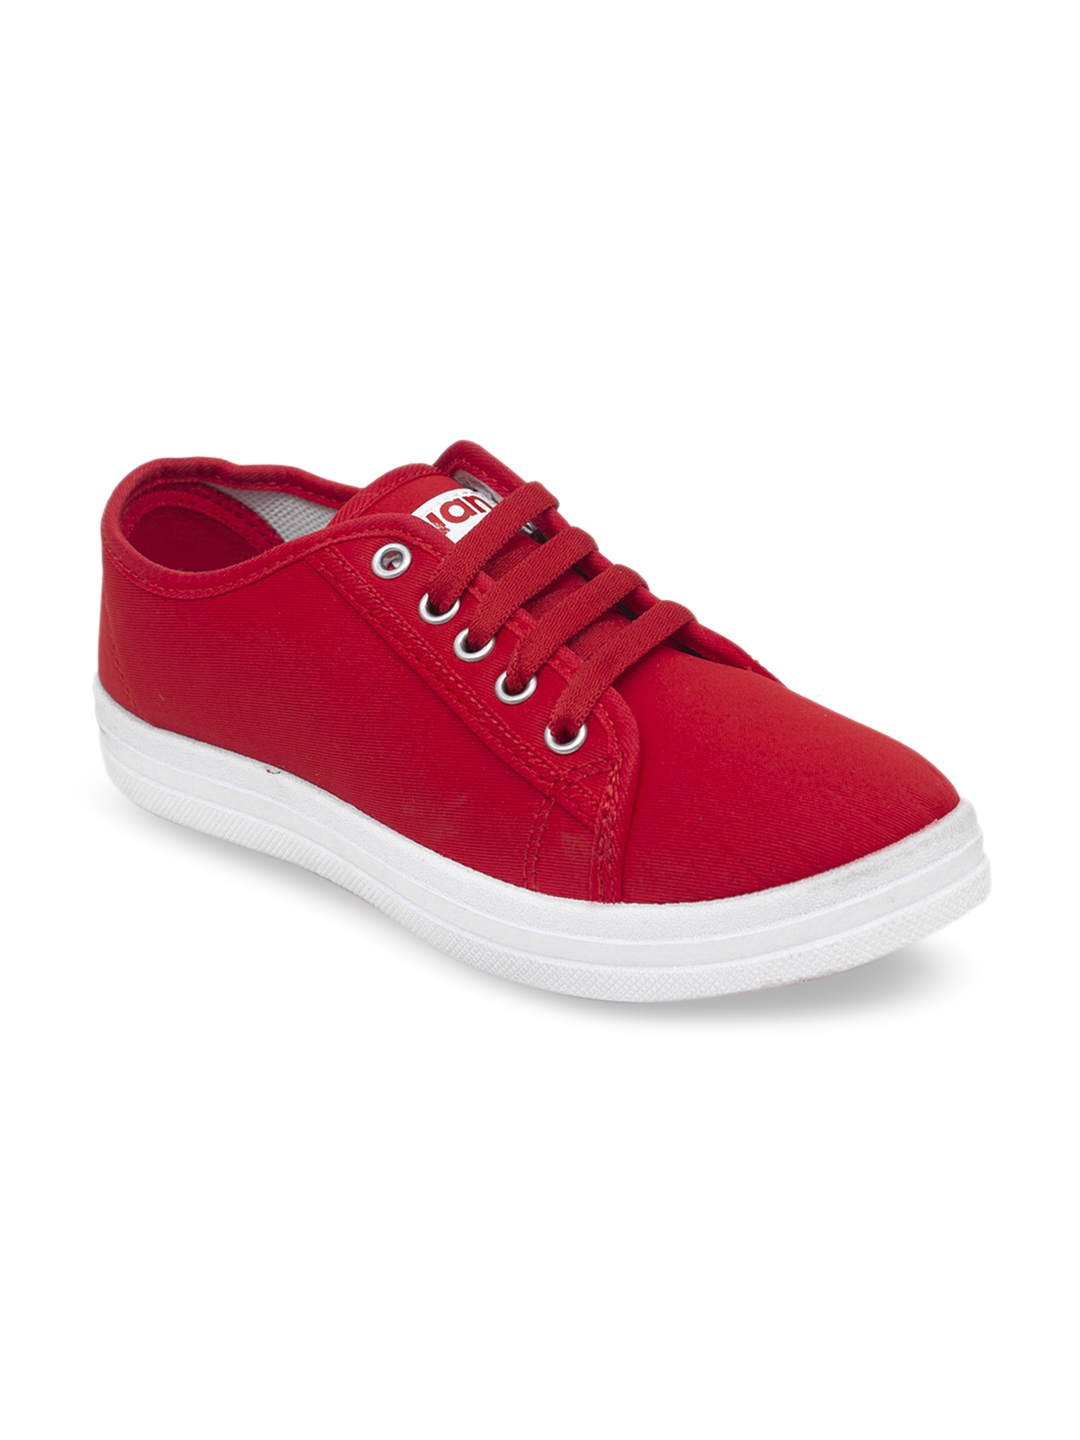 Buy ASIAN Women Red Sneakers - Casual Shoes for Women 9389947 | Myntra